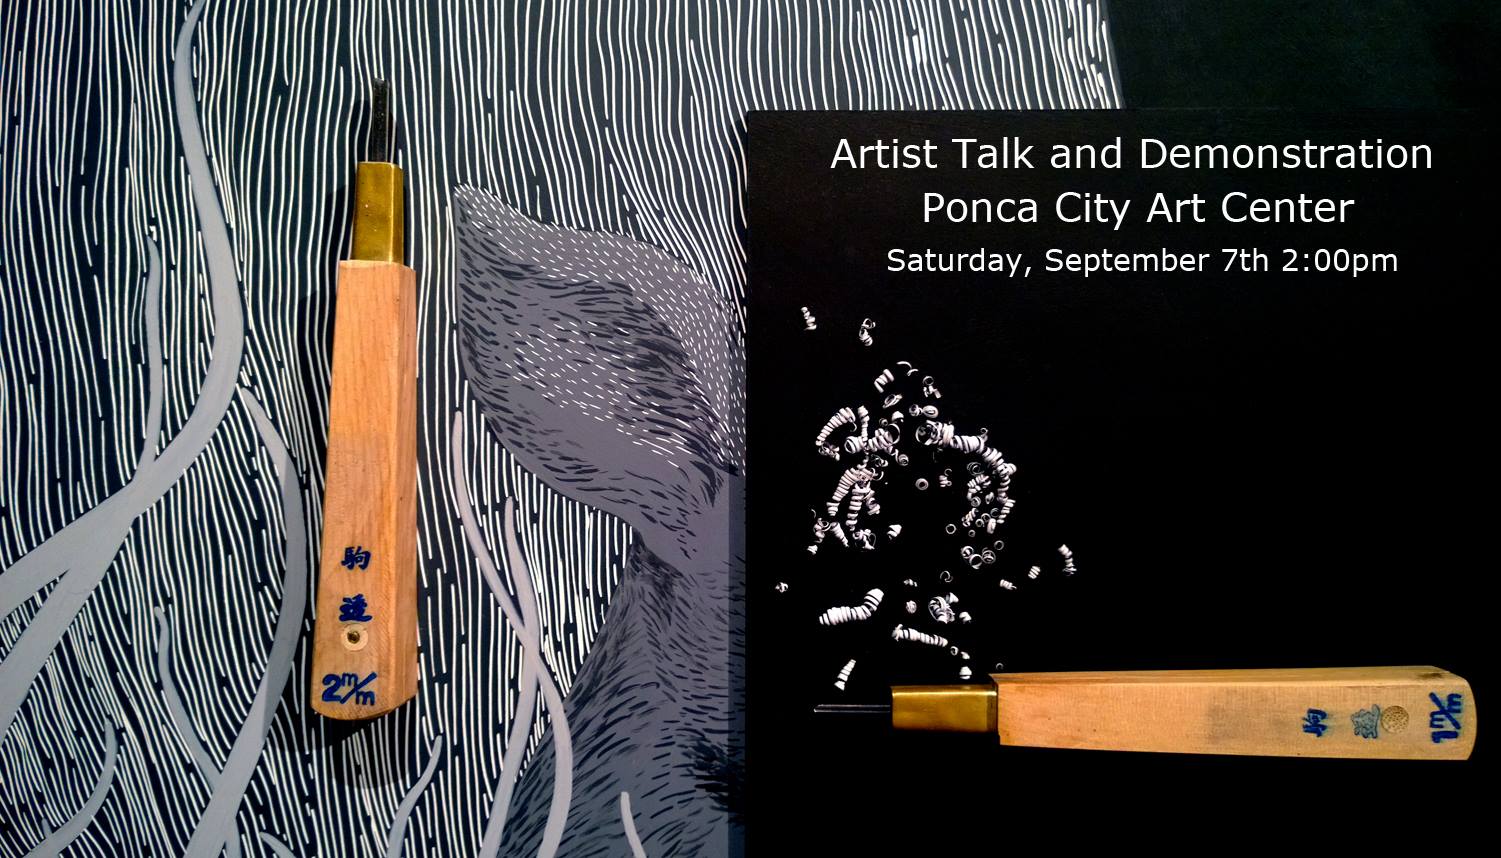 Artist Talk and Art Demonstration at Ponca City Art Center